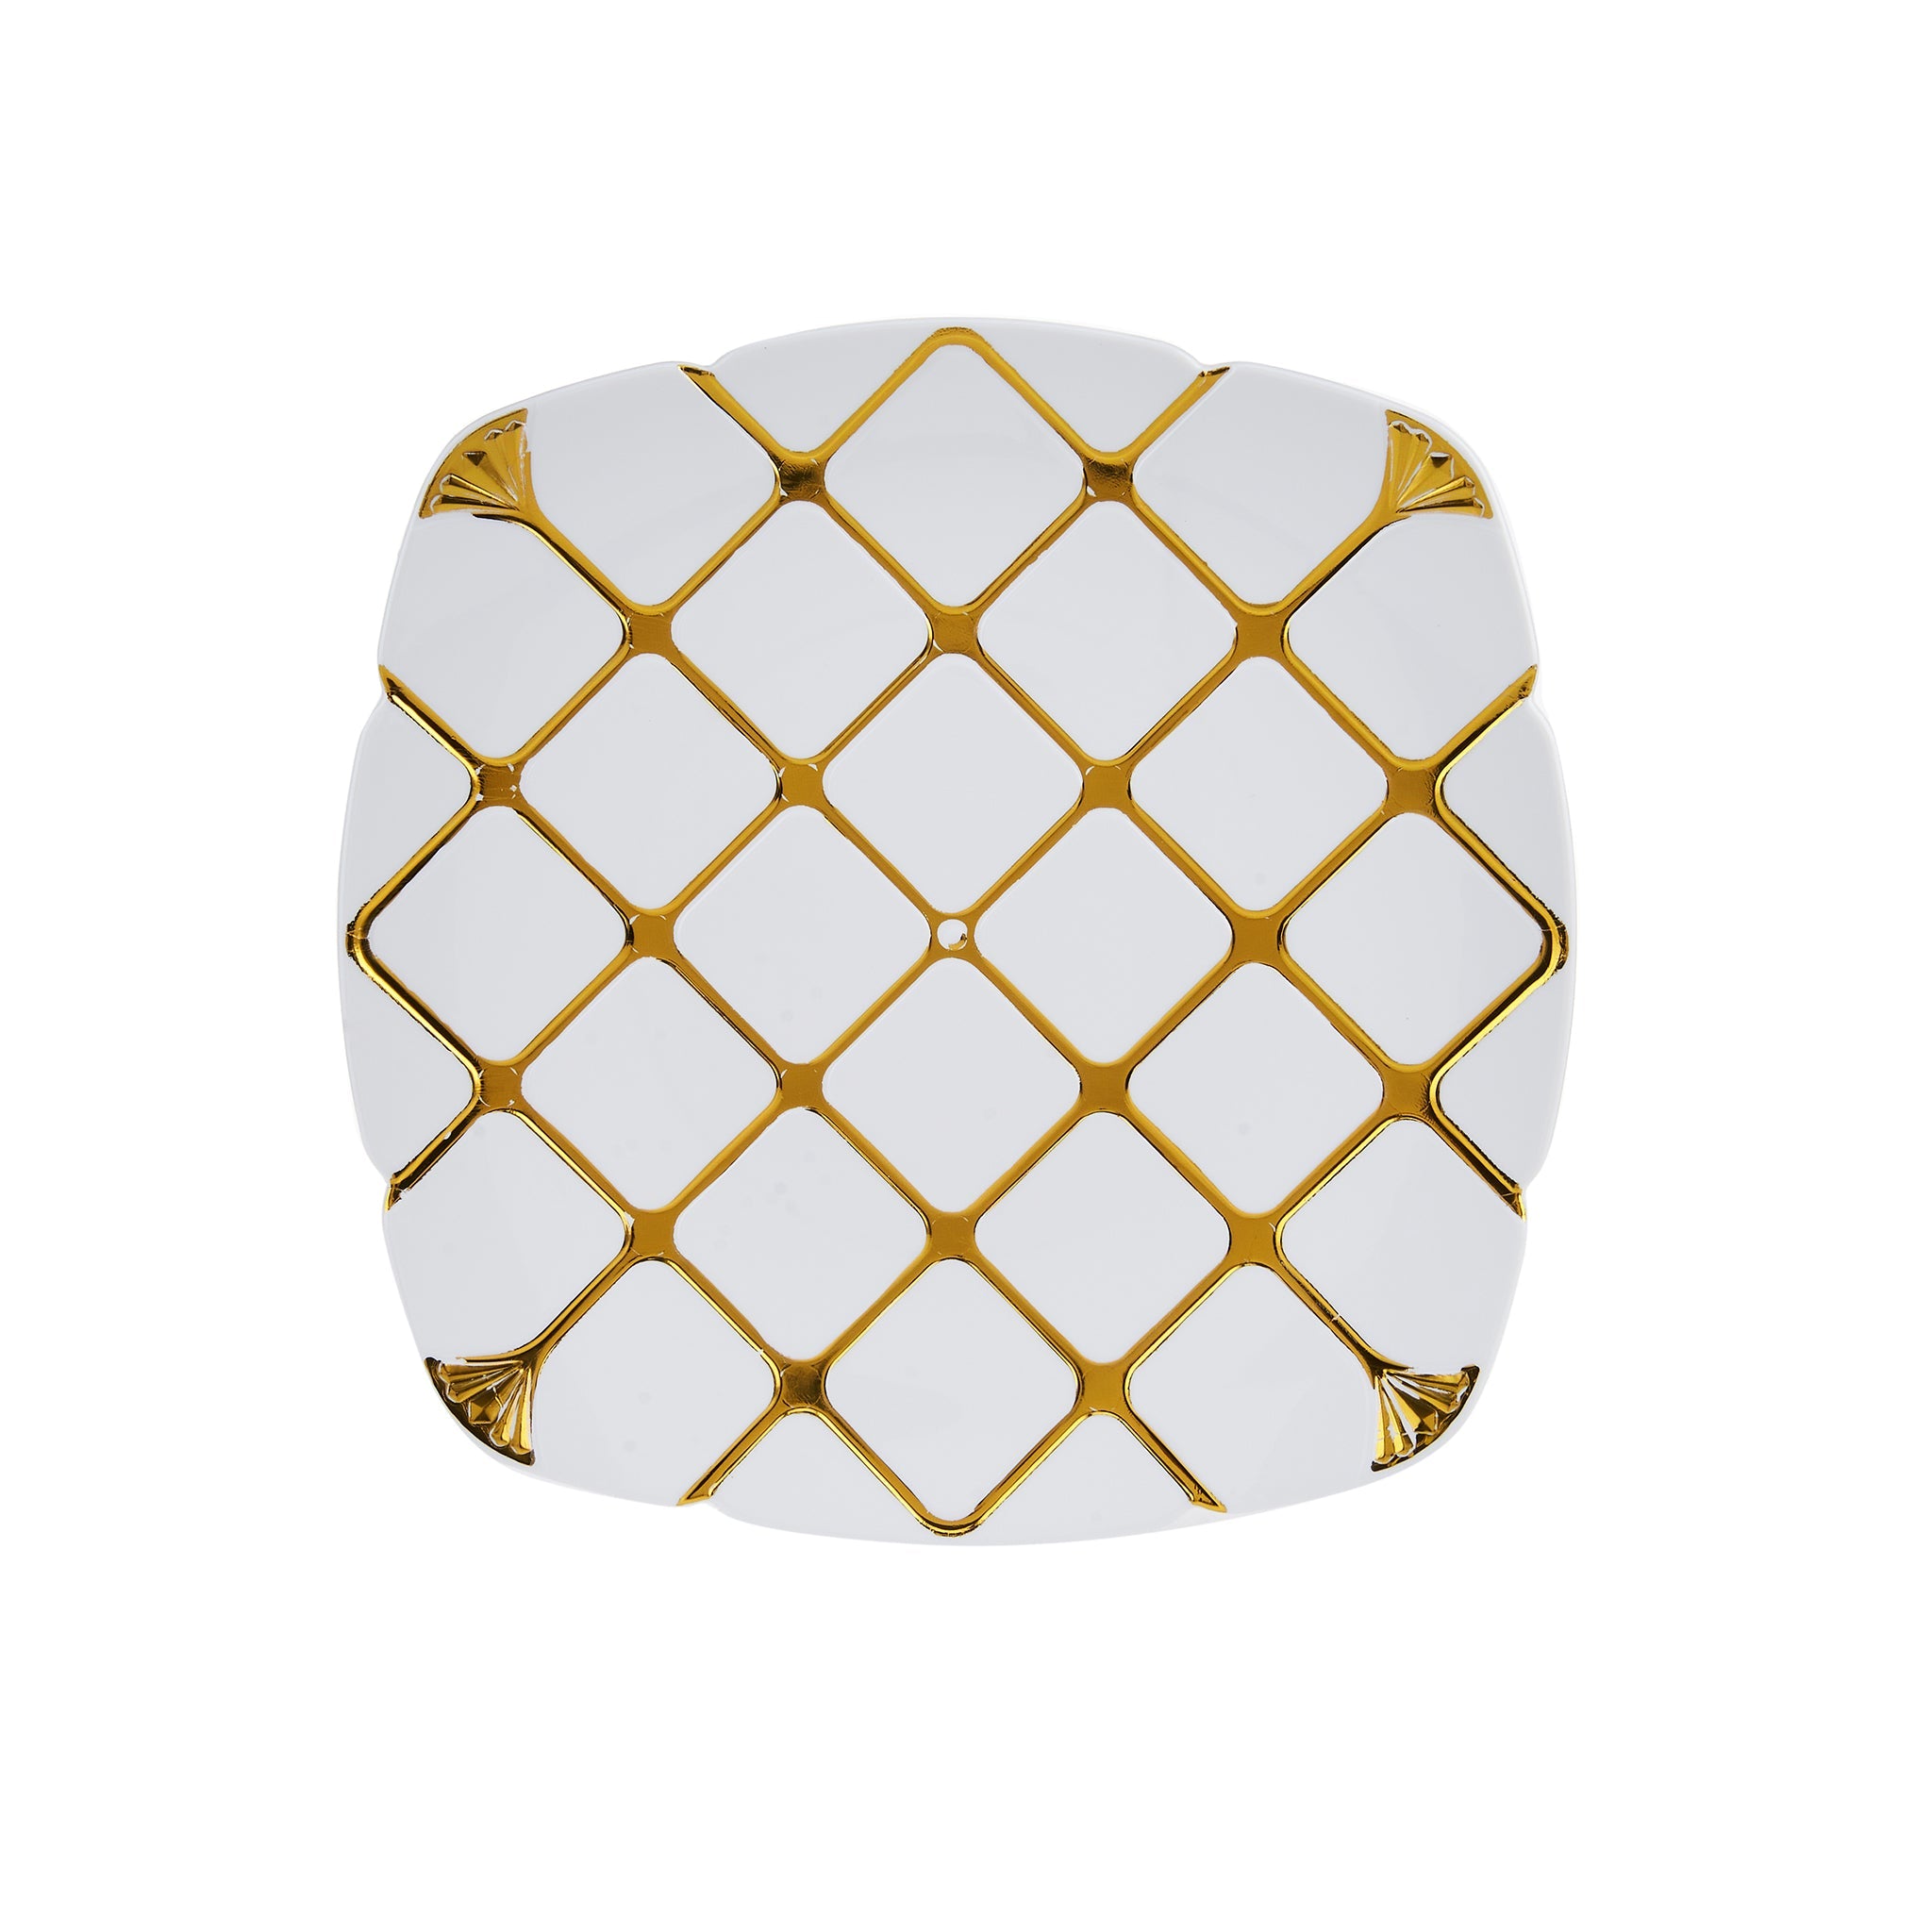 10 Inch White Square Plate With Silver Rim Design 10 Pieces